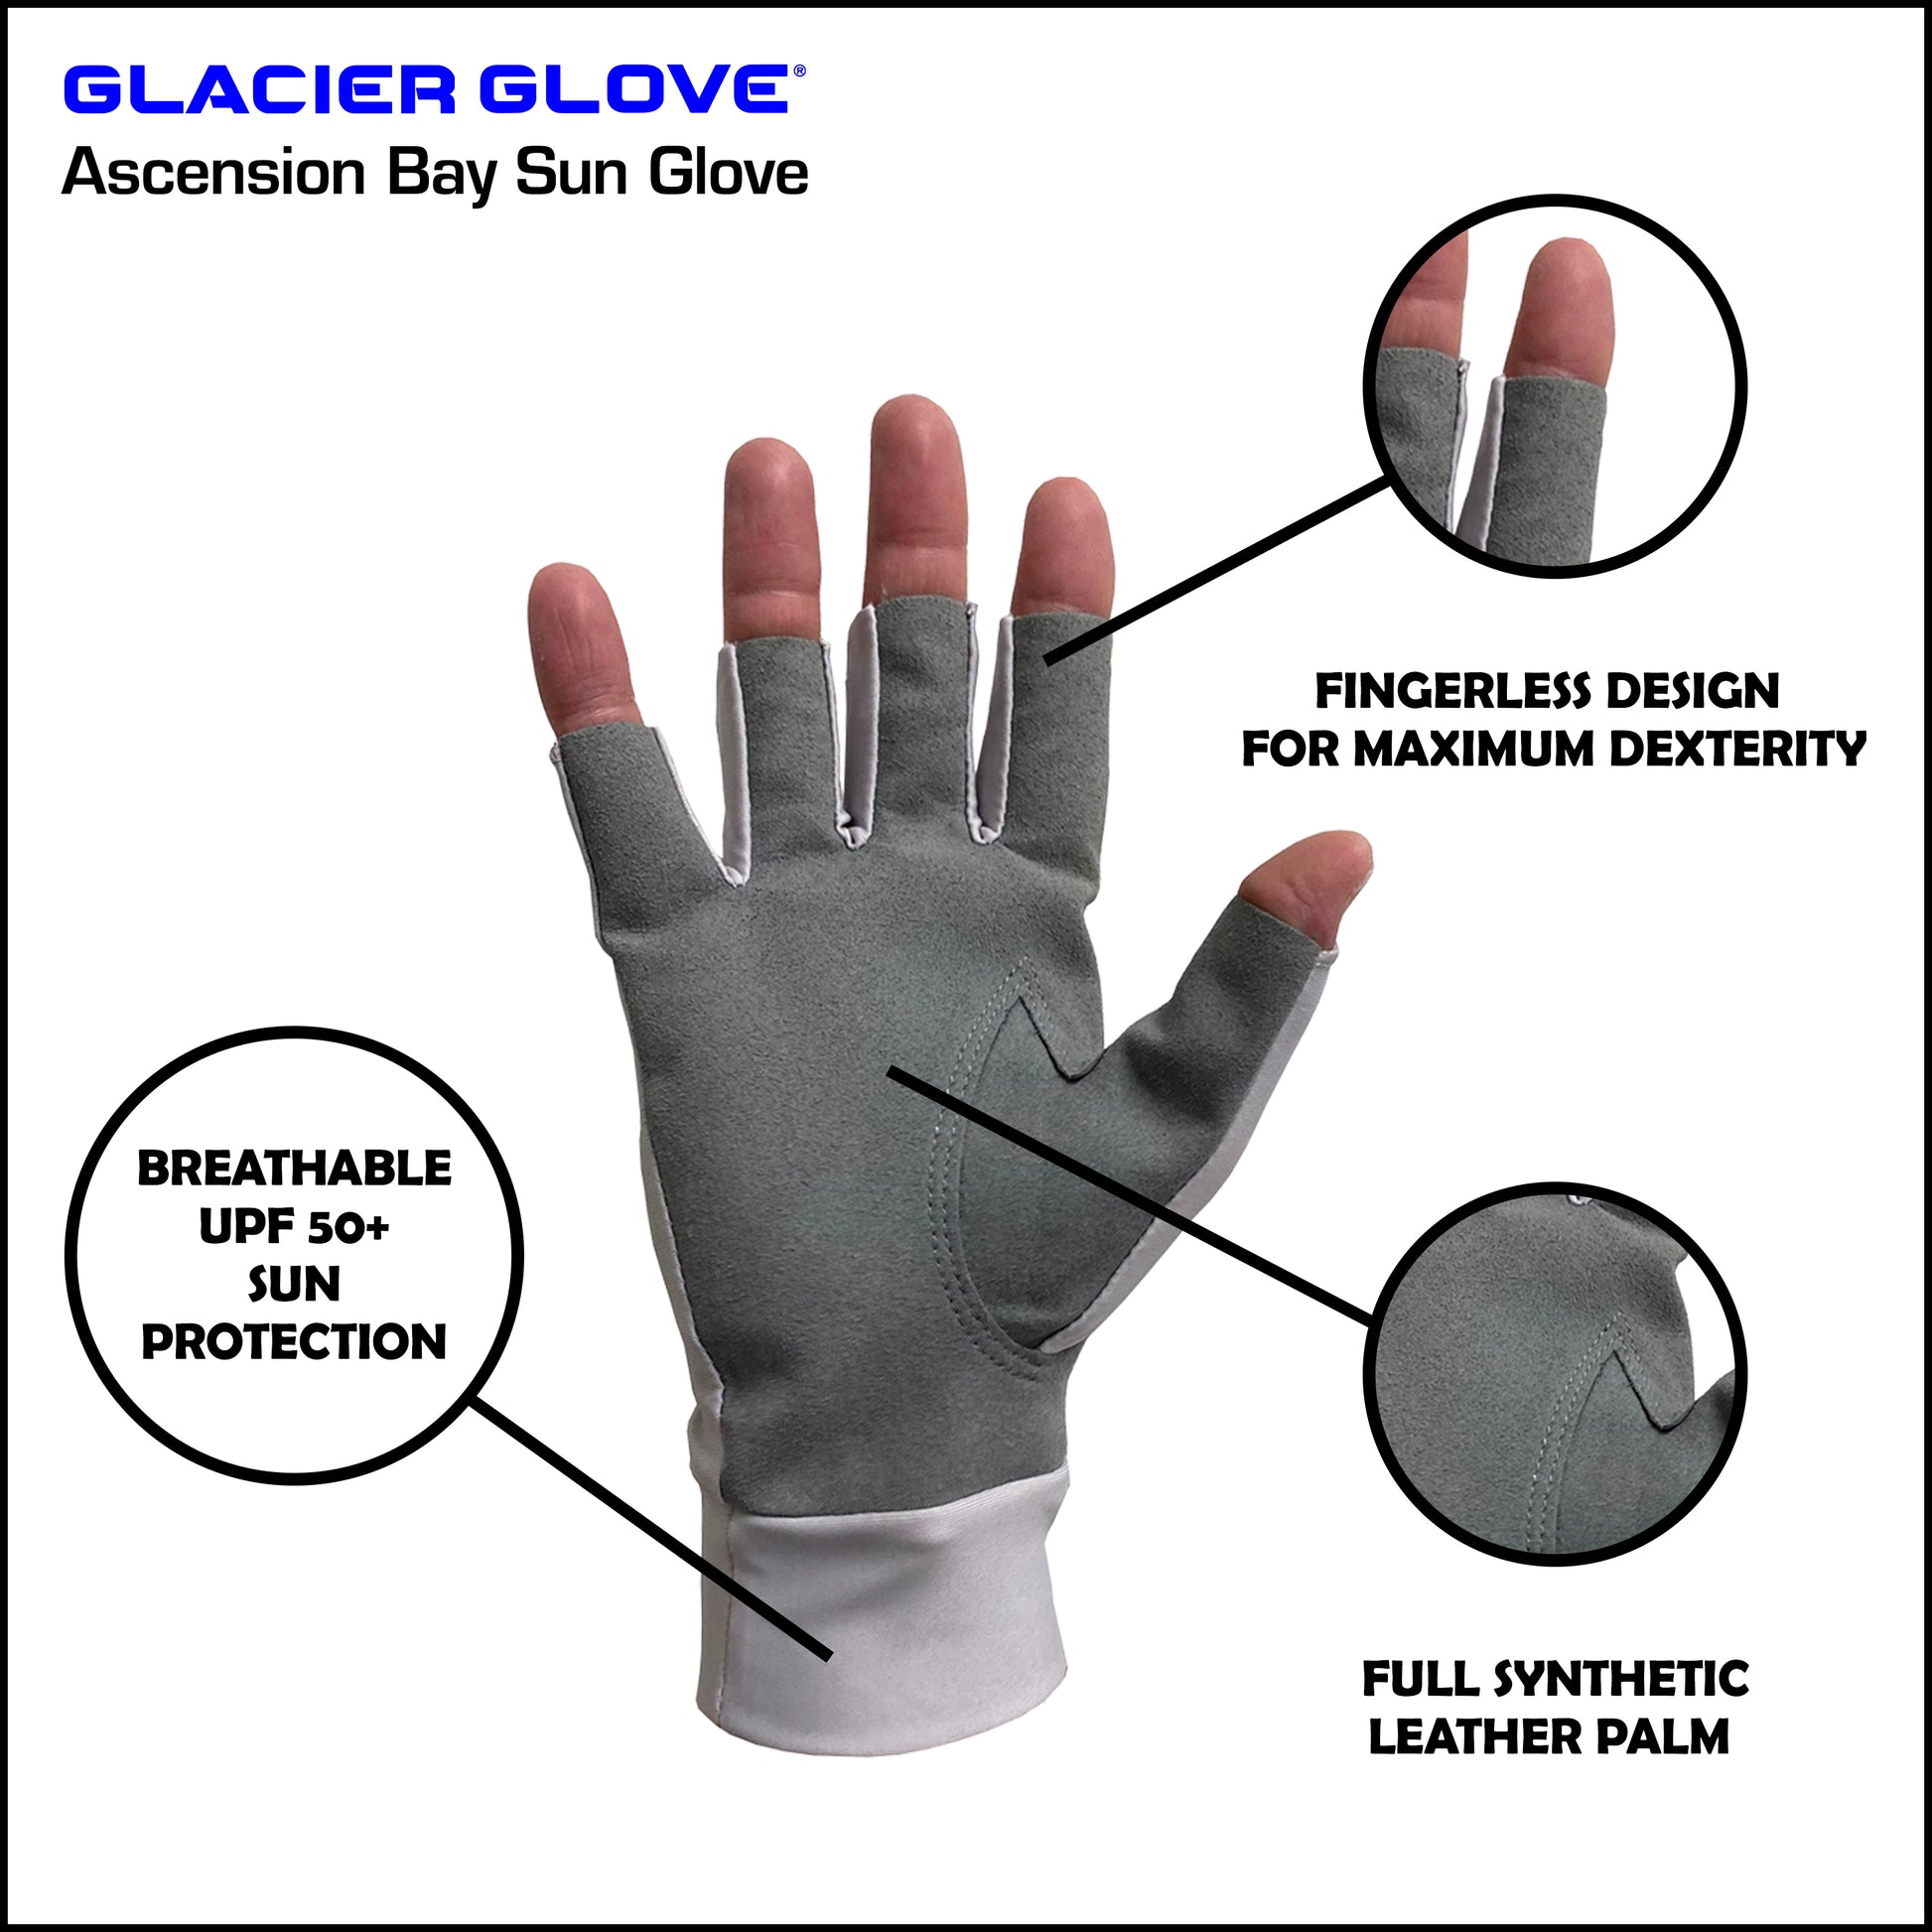 Fish Monkey Task Fleece Gloves Ice Fishing Gloves Touch Screen w